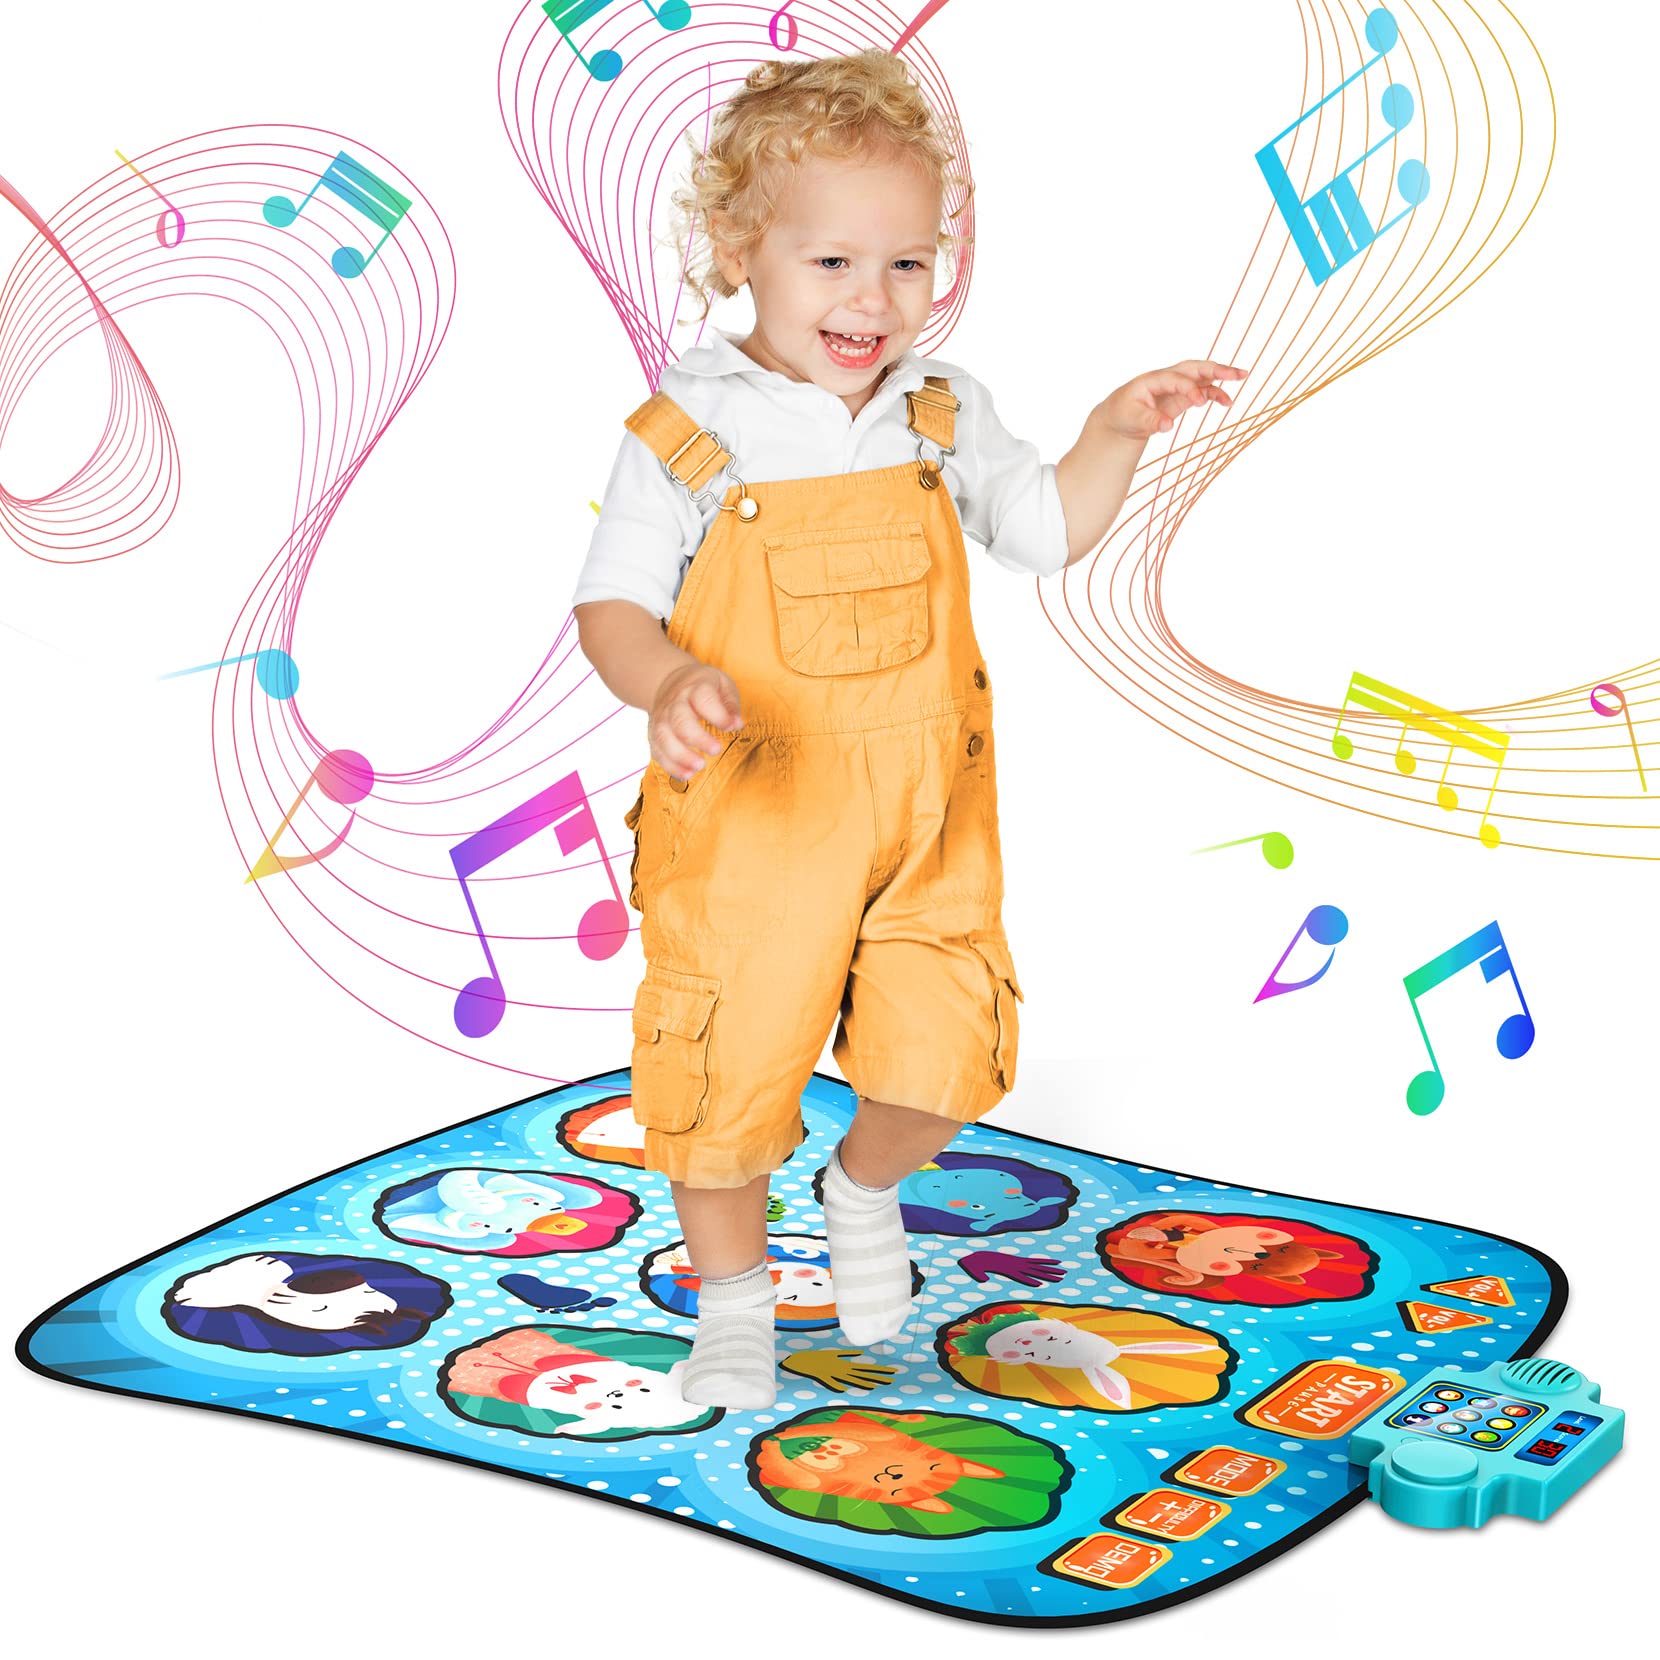 Dance Mat, Dance Floor Mat for Age 3+ Kids, 8 Challenge Levels, 9 Built-in Music, Electronic Dance Mat LED Lights, Adjustable Volume,3 Game Modes, Piano & Demonstration Mode, Foldable/Portable